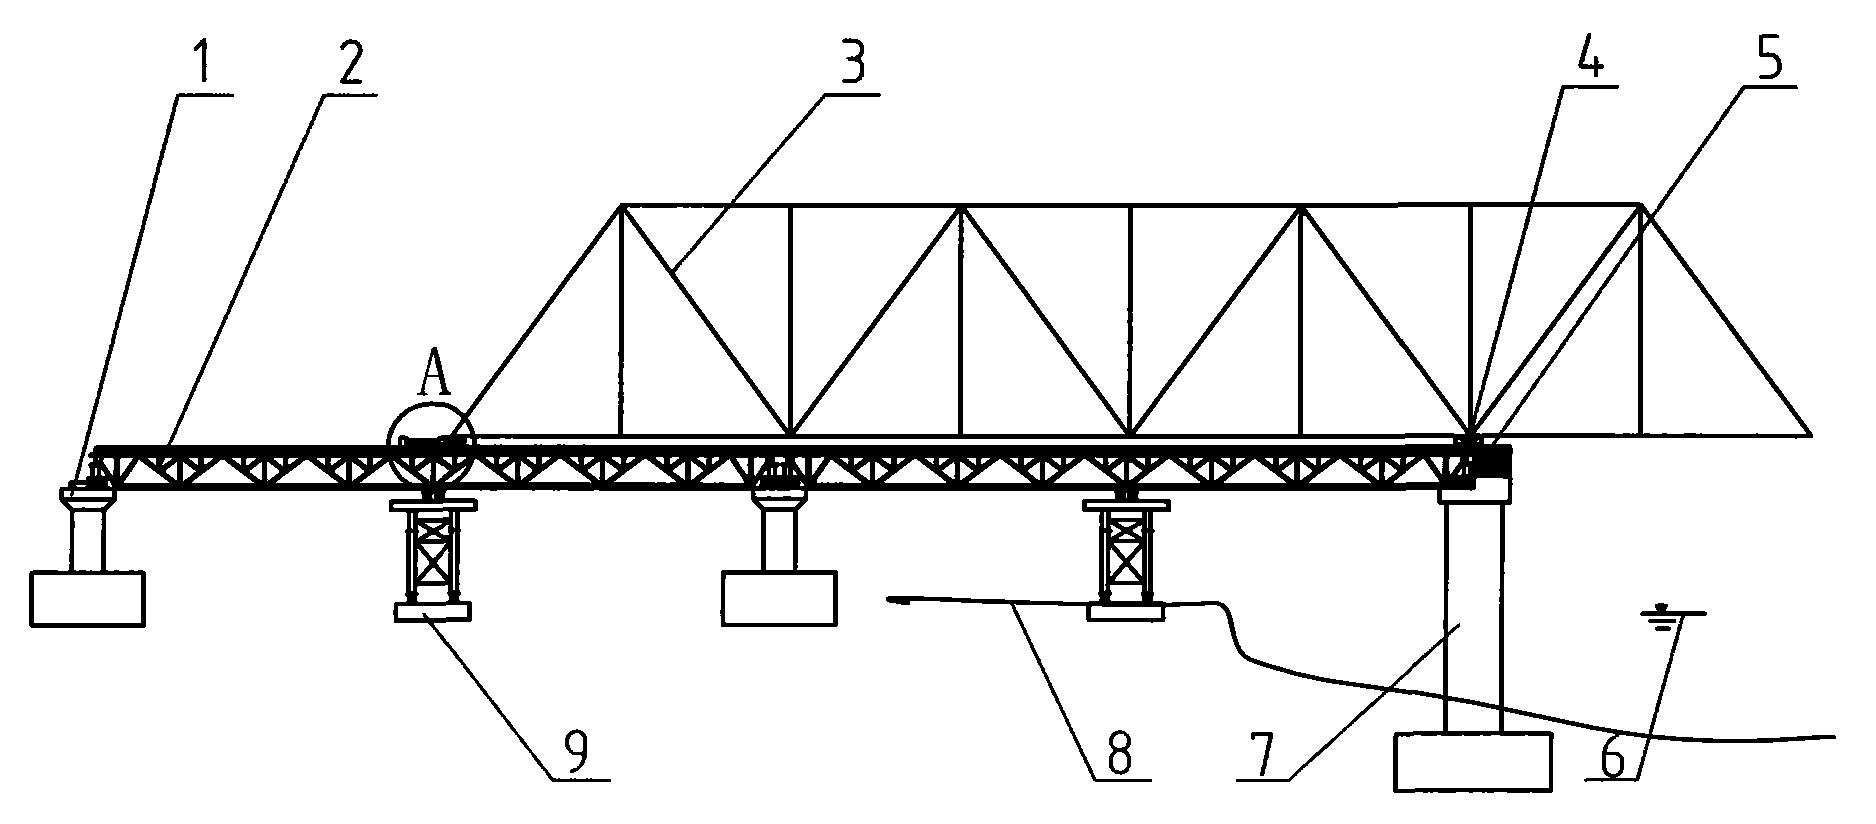 Construction method for erecting steel truss girder on uplift pushing tow